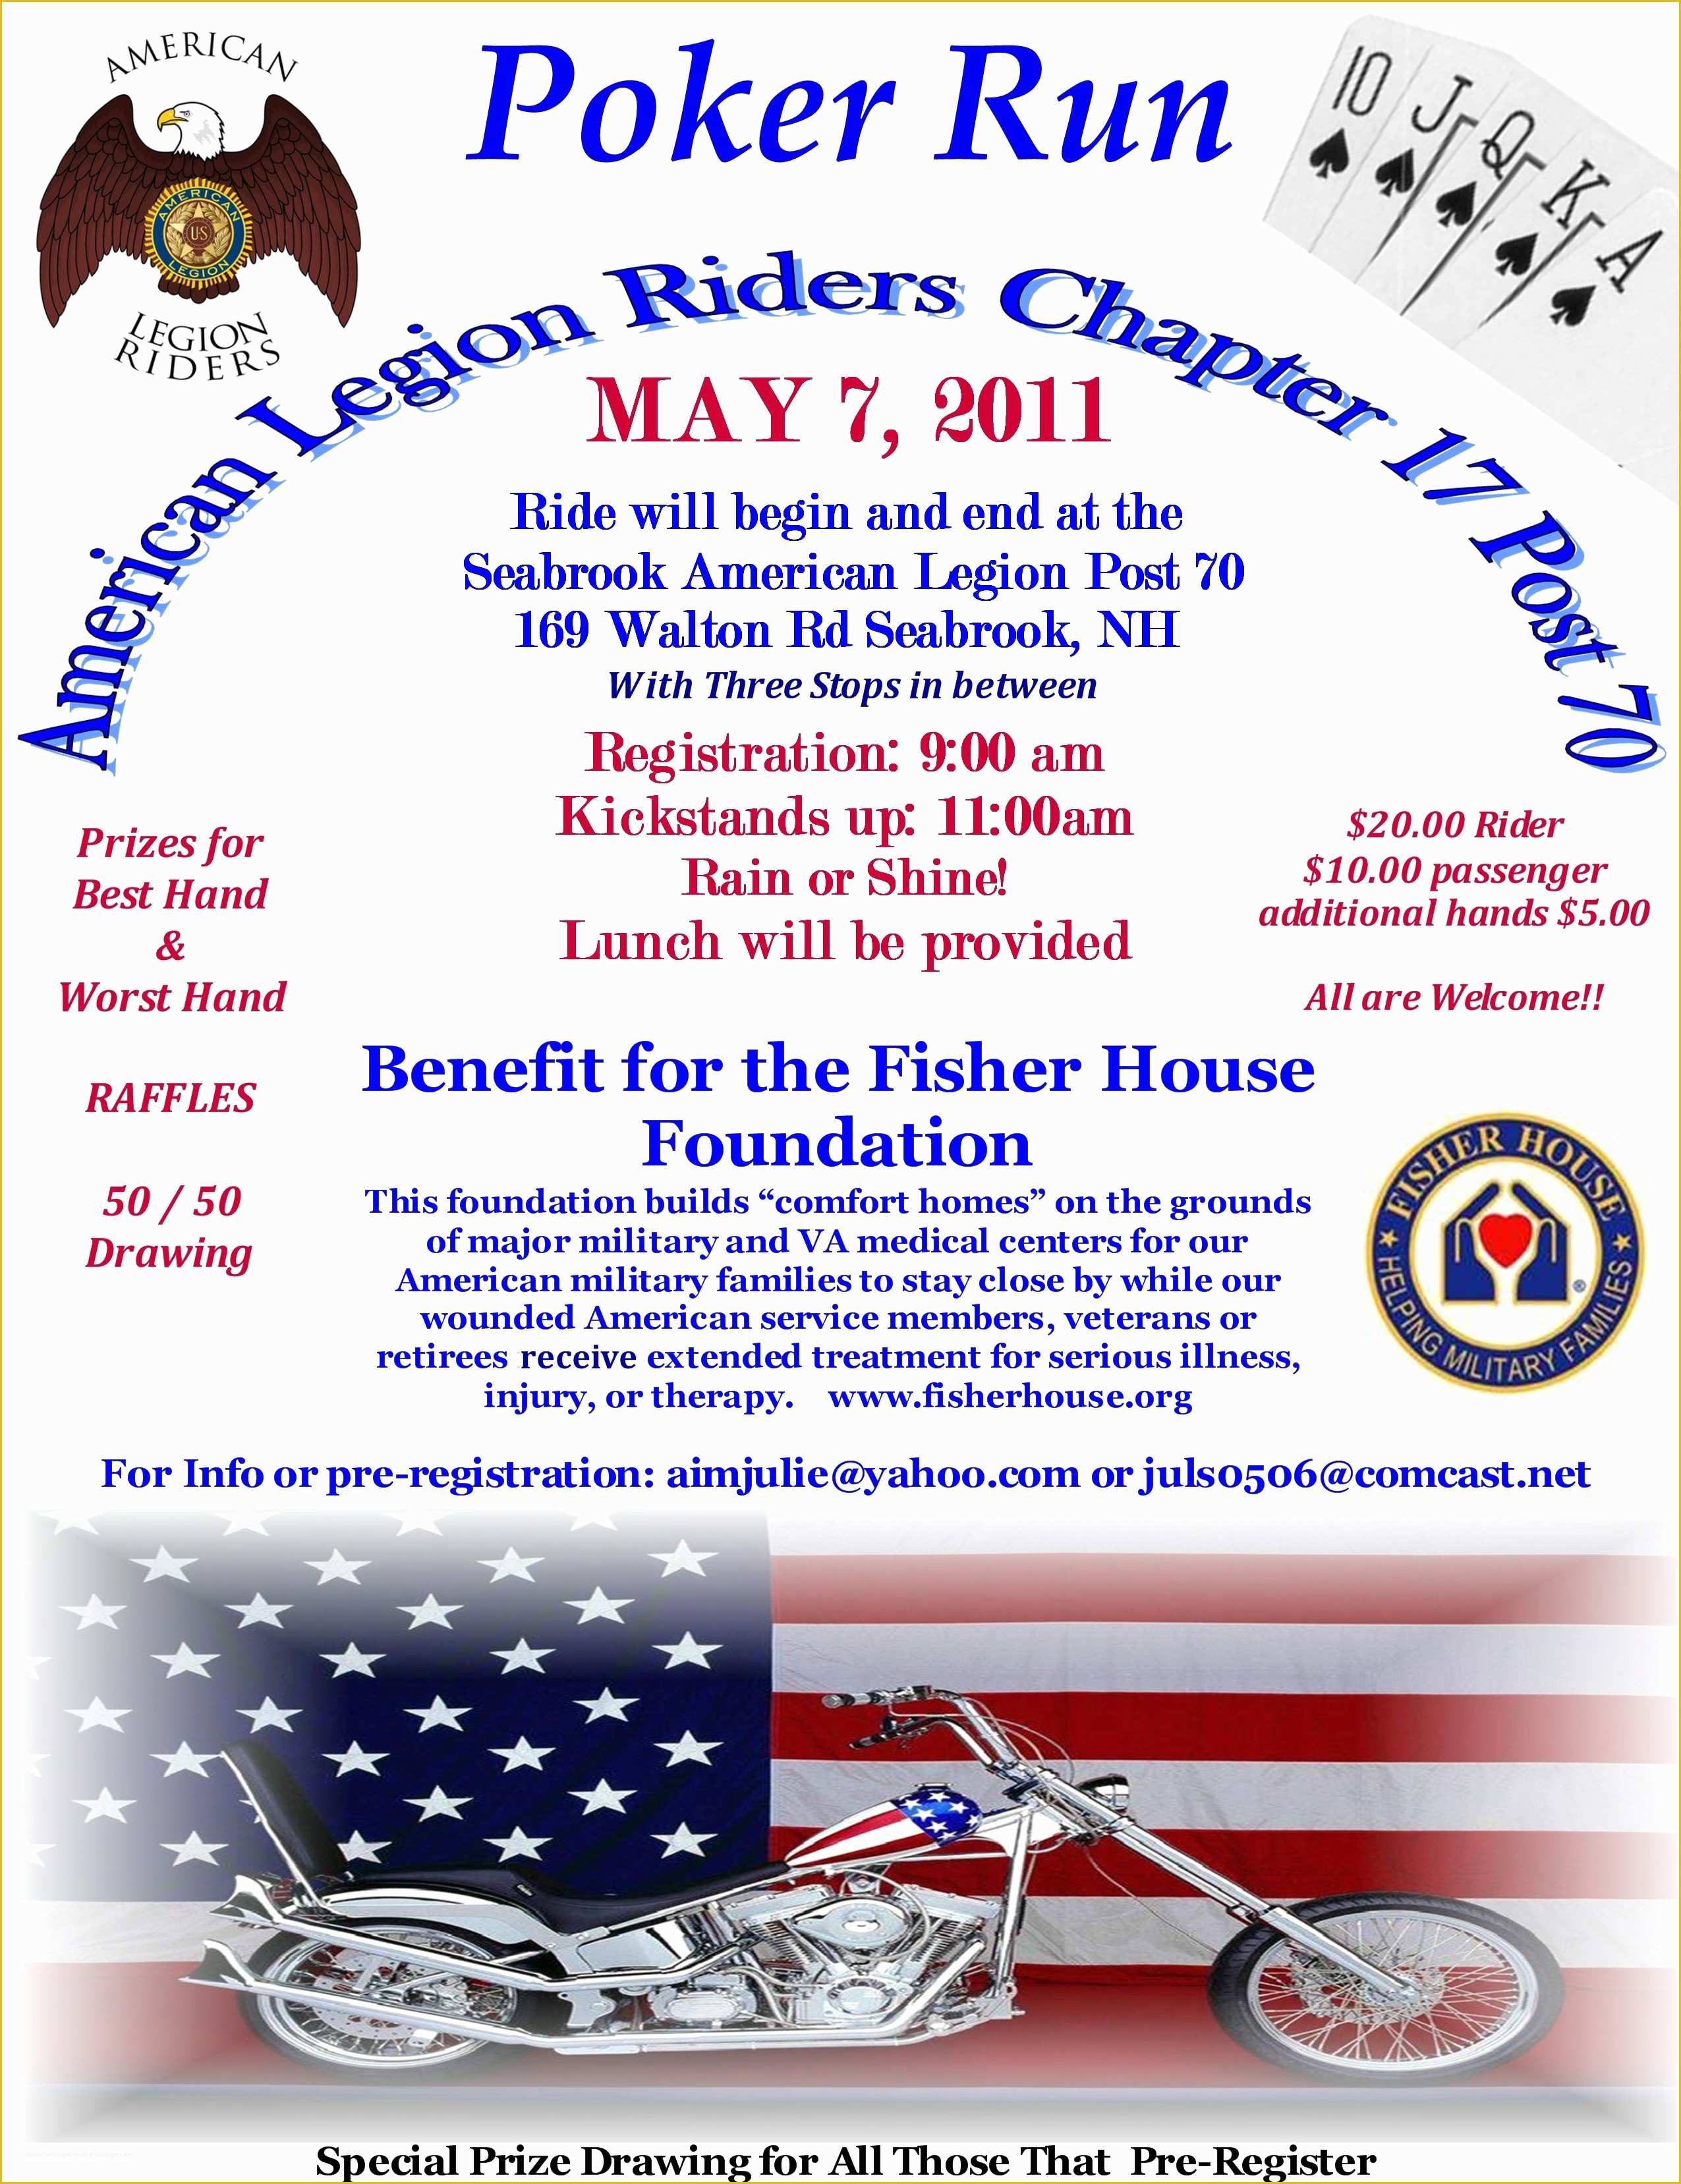 Poker Run Flyer Template Free Of American Legion Riders Membership Card Template